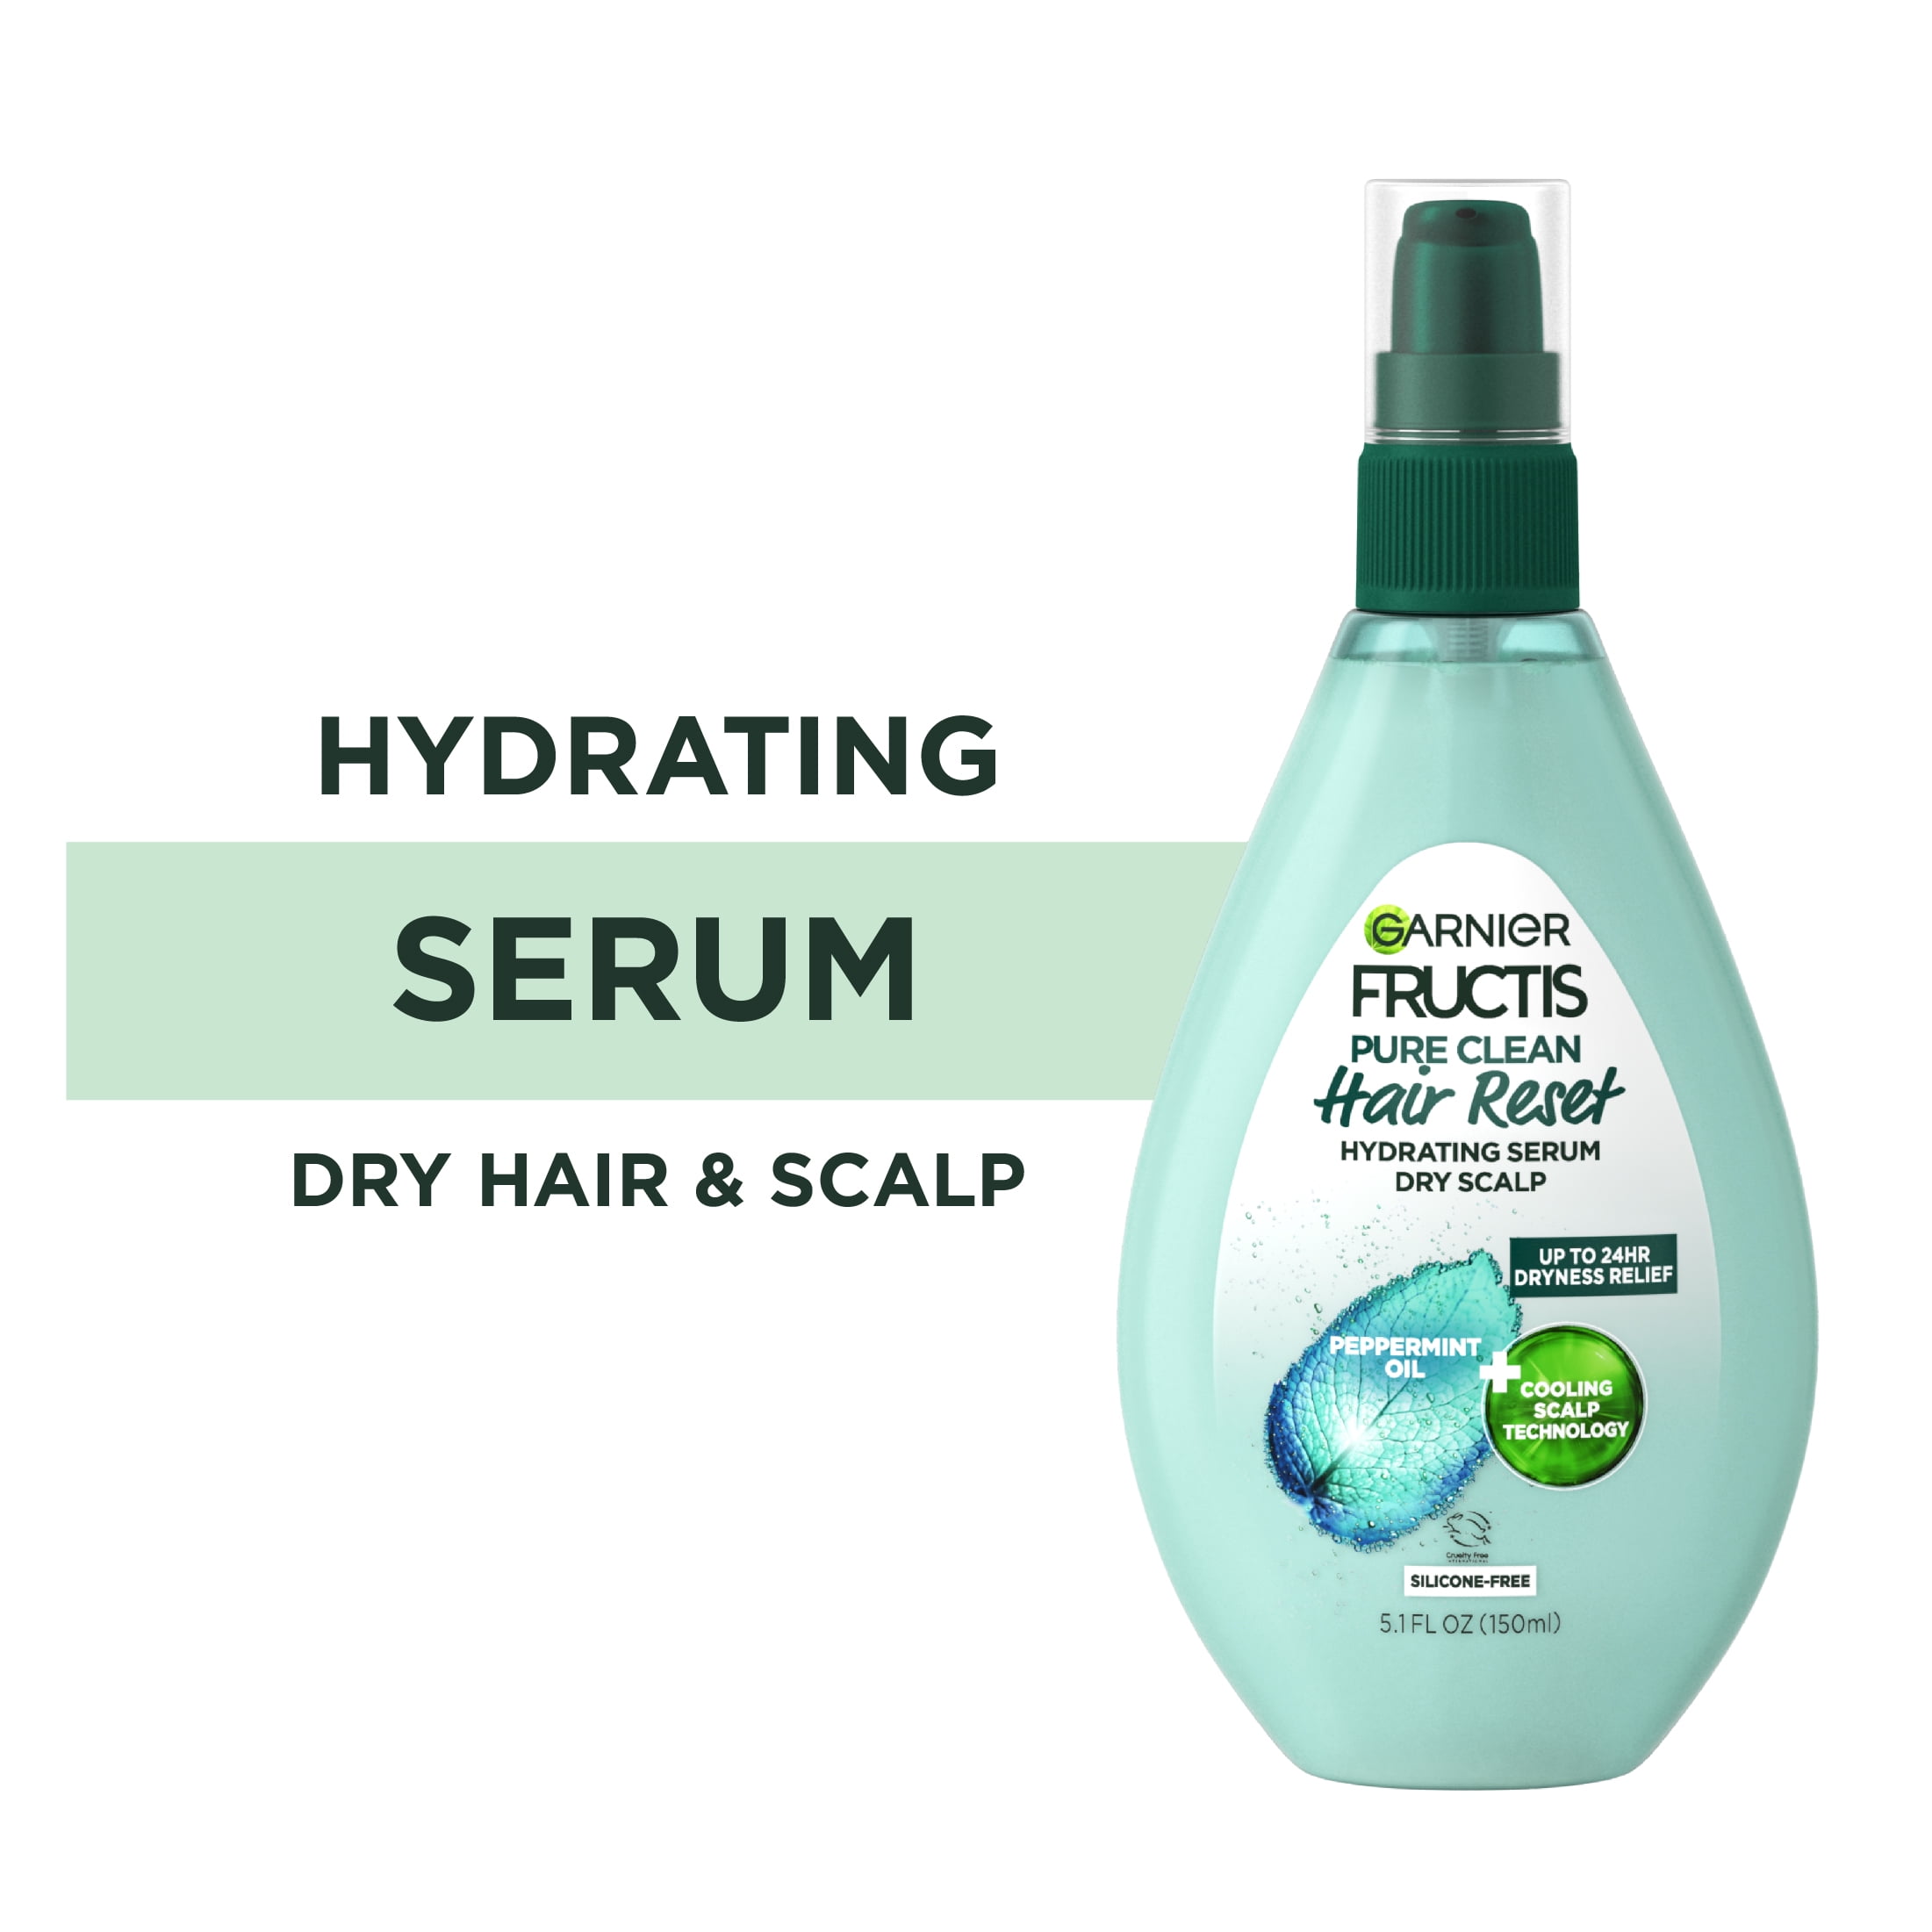 Garnier Fructis Pure Clean Hair Reset Anti-Dryness Serum, Dry Scalp,   fl oz 